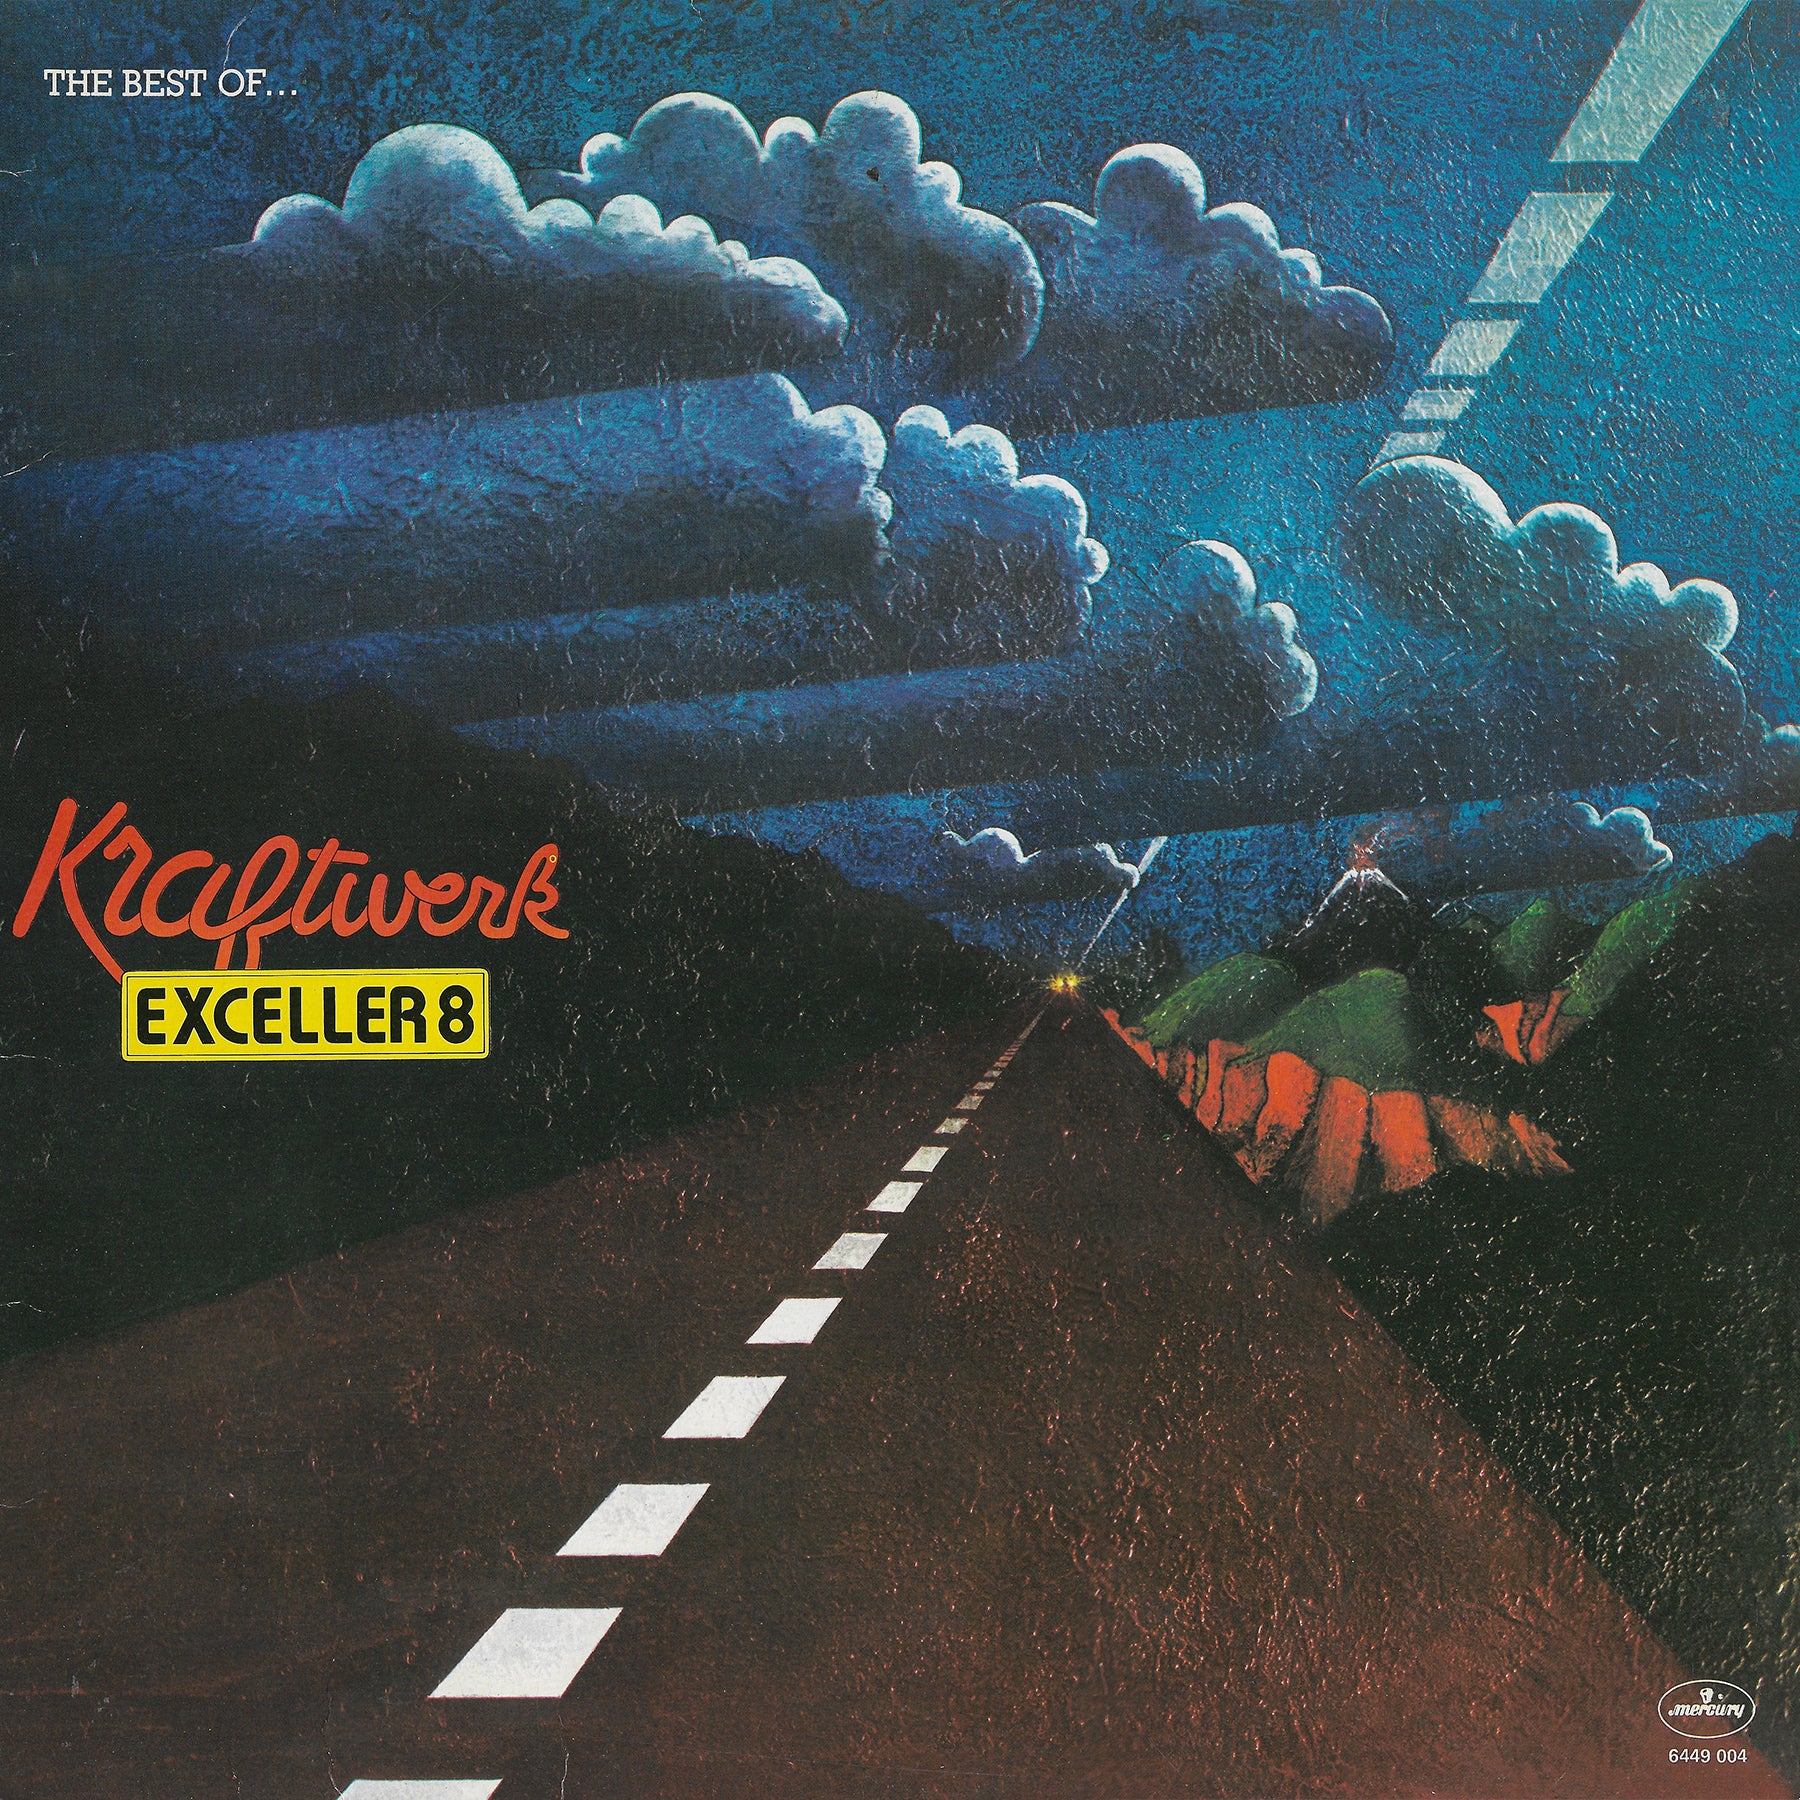 Kraftwerk - Exceller 8 (The Best Of...)